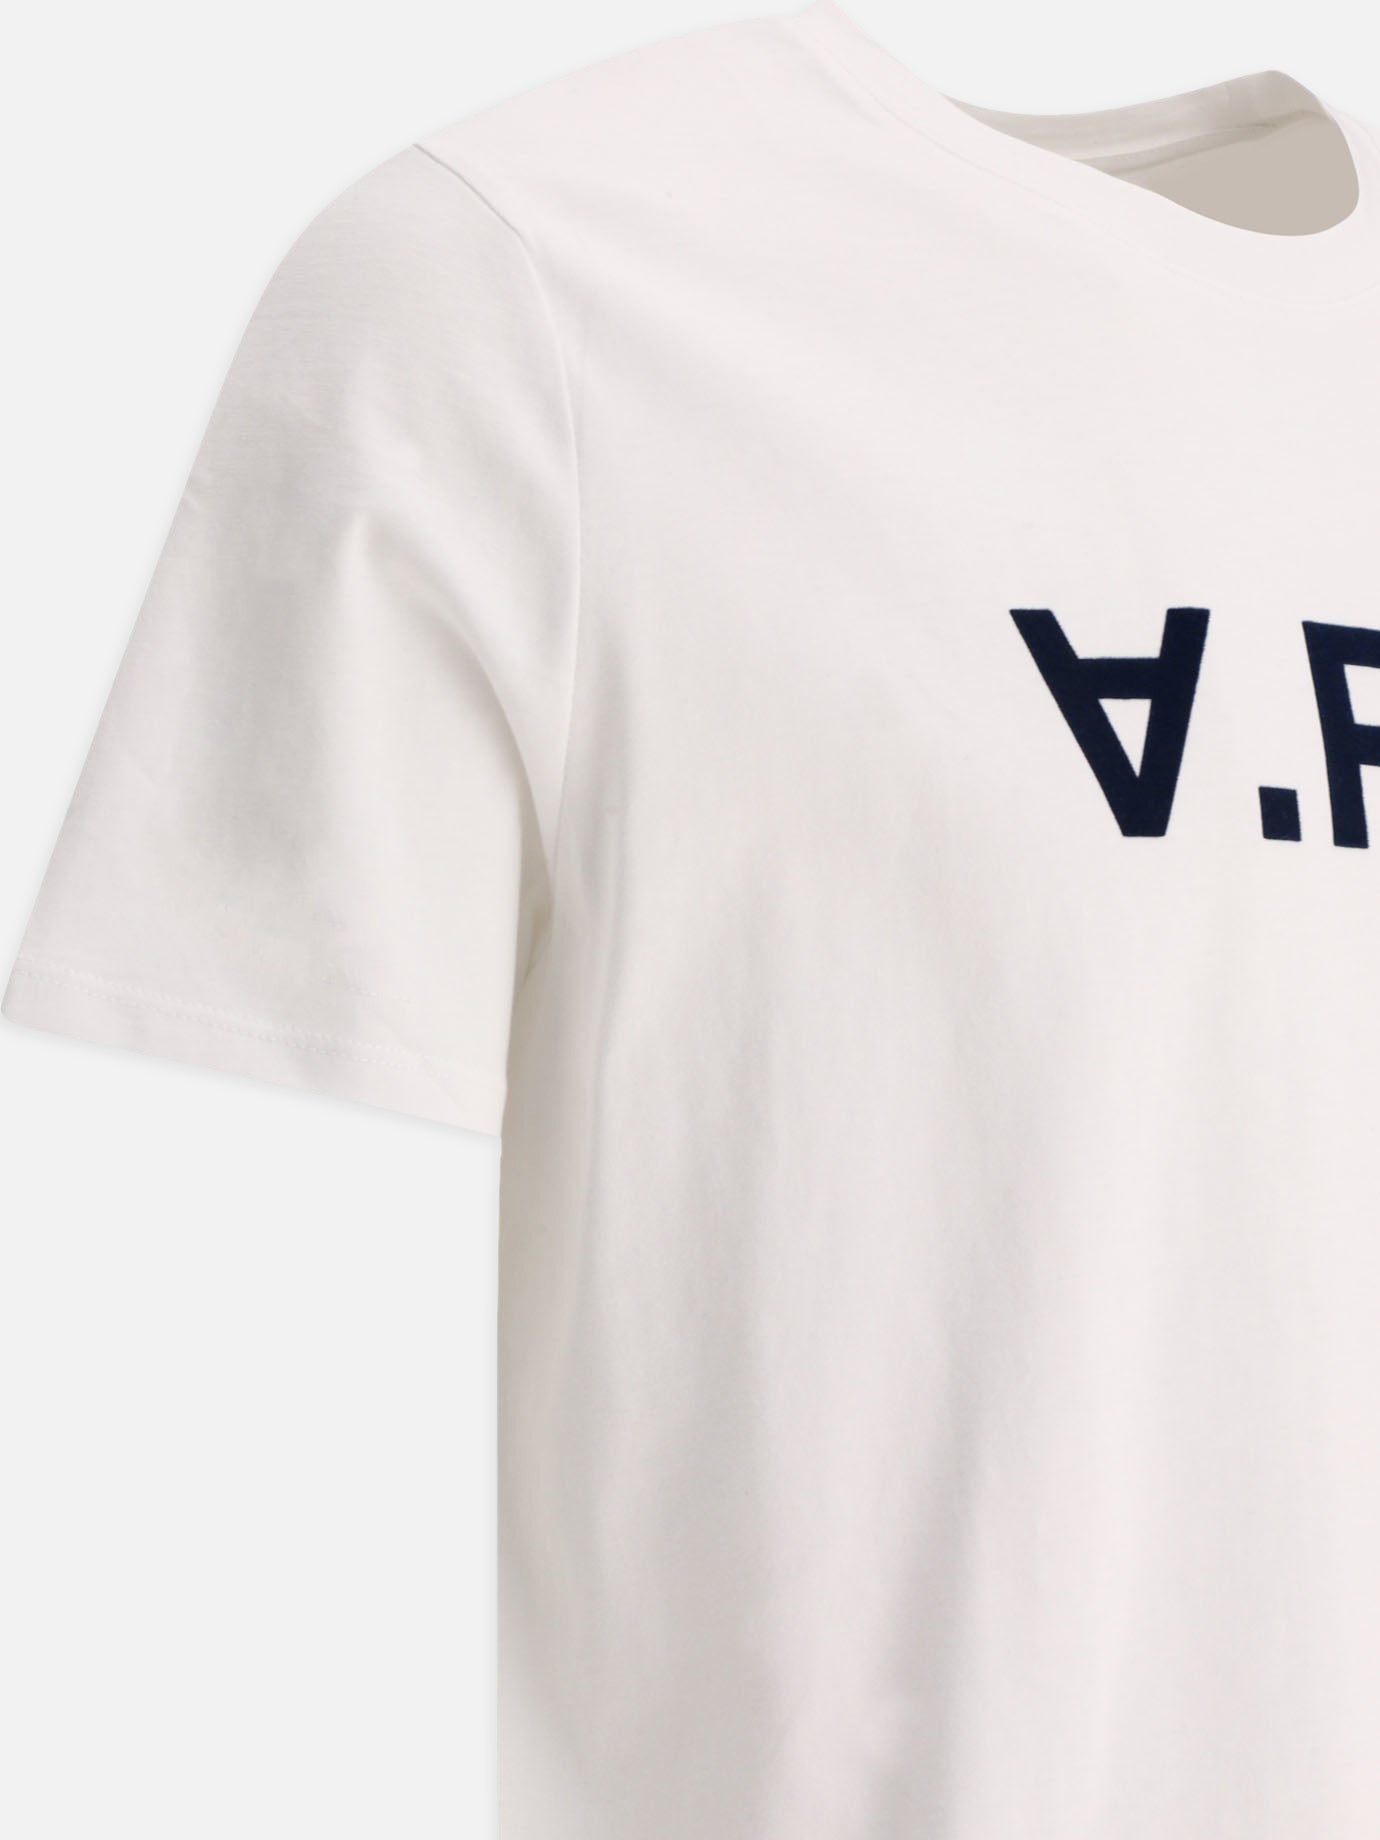 "VPC" t-shirt